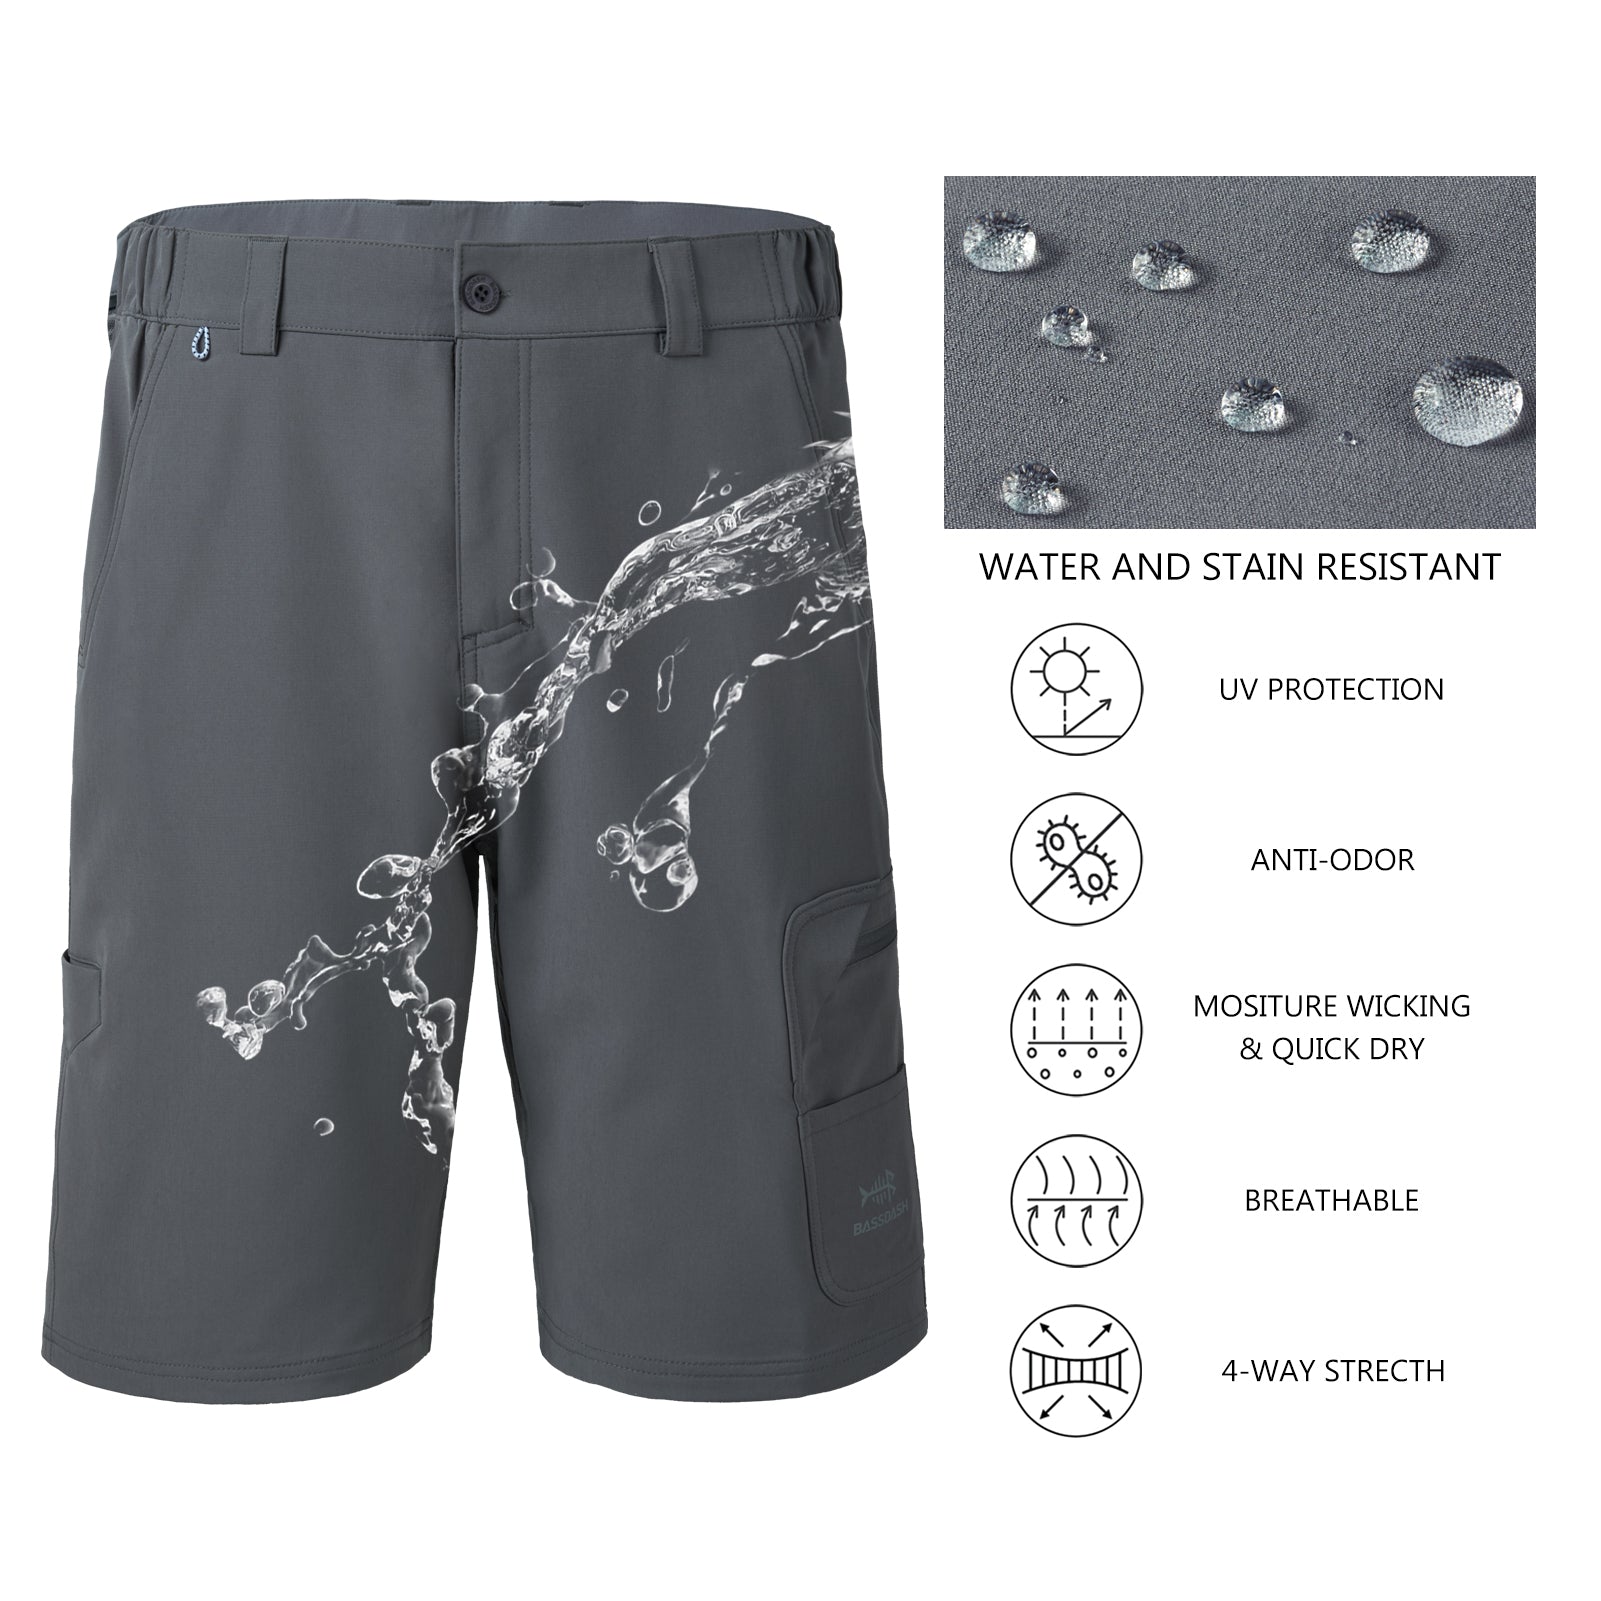 maamgic Mens Hiking Shorts 10 Waterproof Quick Dry Cargo Shorts Tactical Shorts for Camping Fishing Outdoor Activity